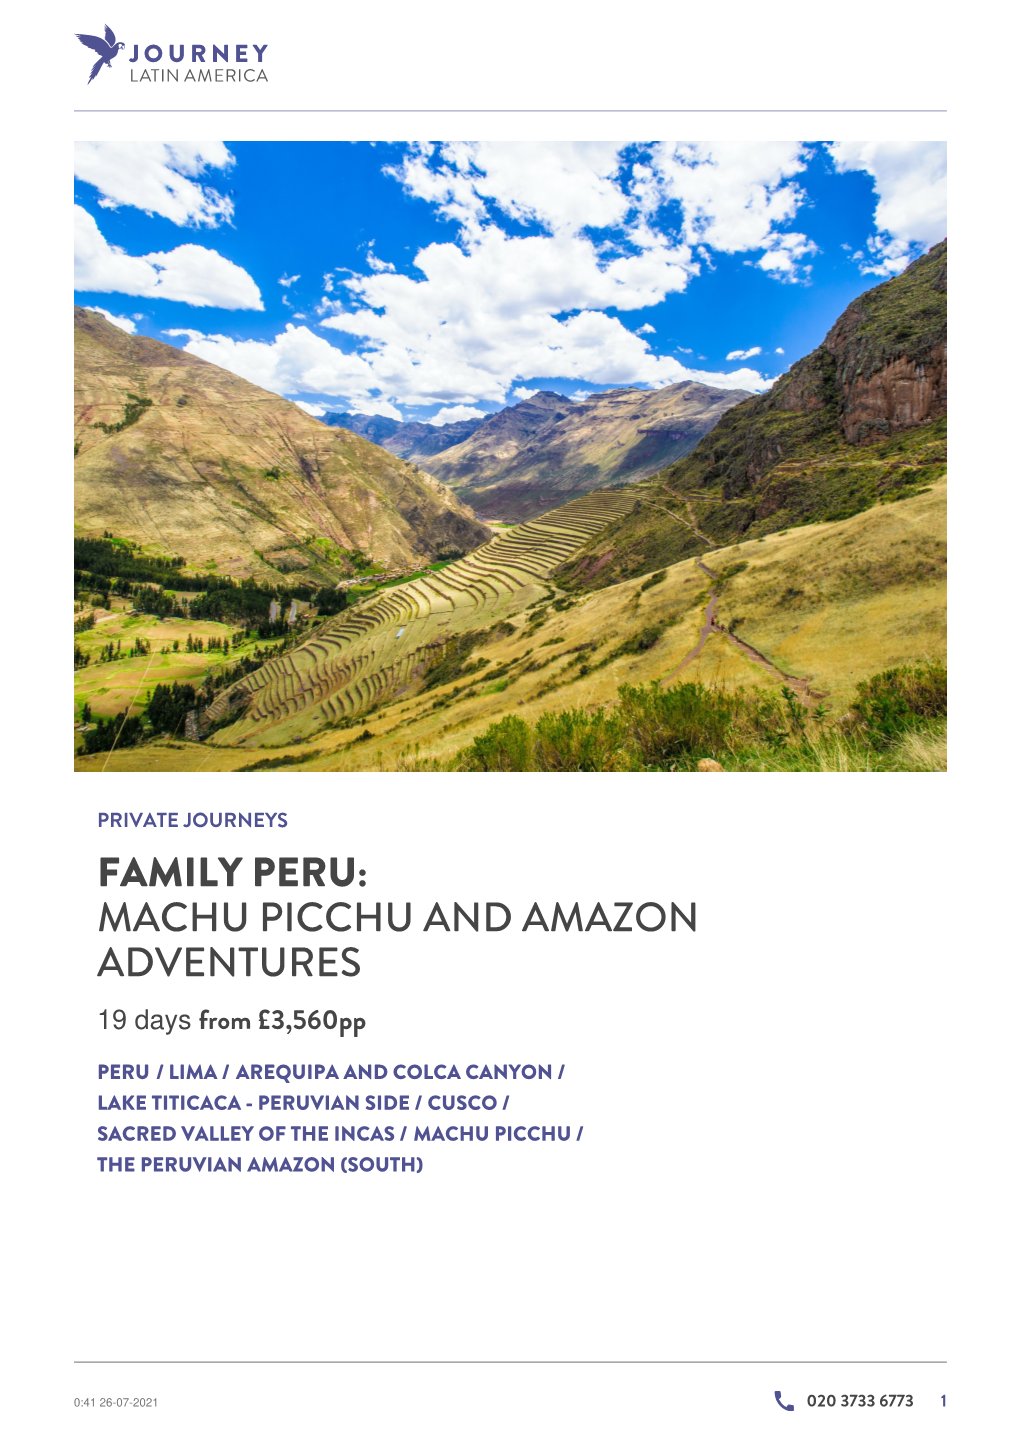 Family Peru: Machu Picchu and Amazon Adventures